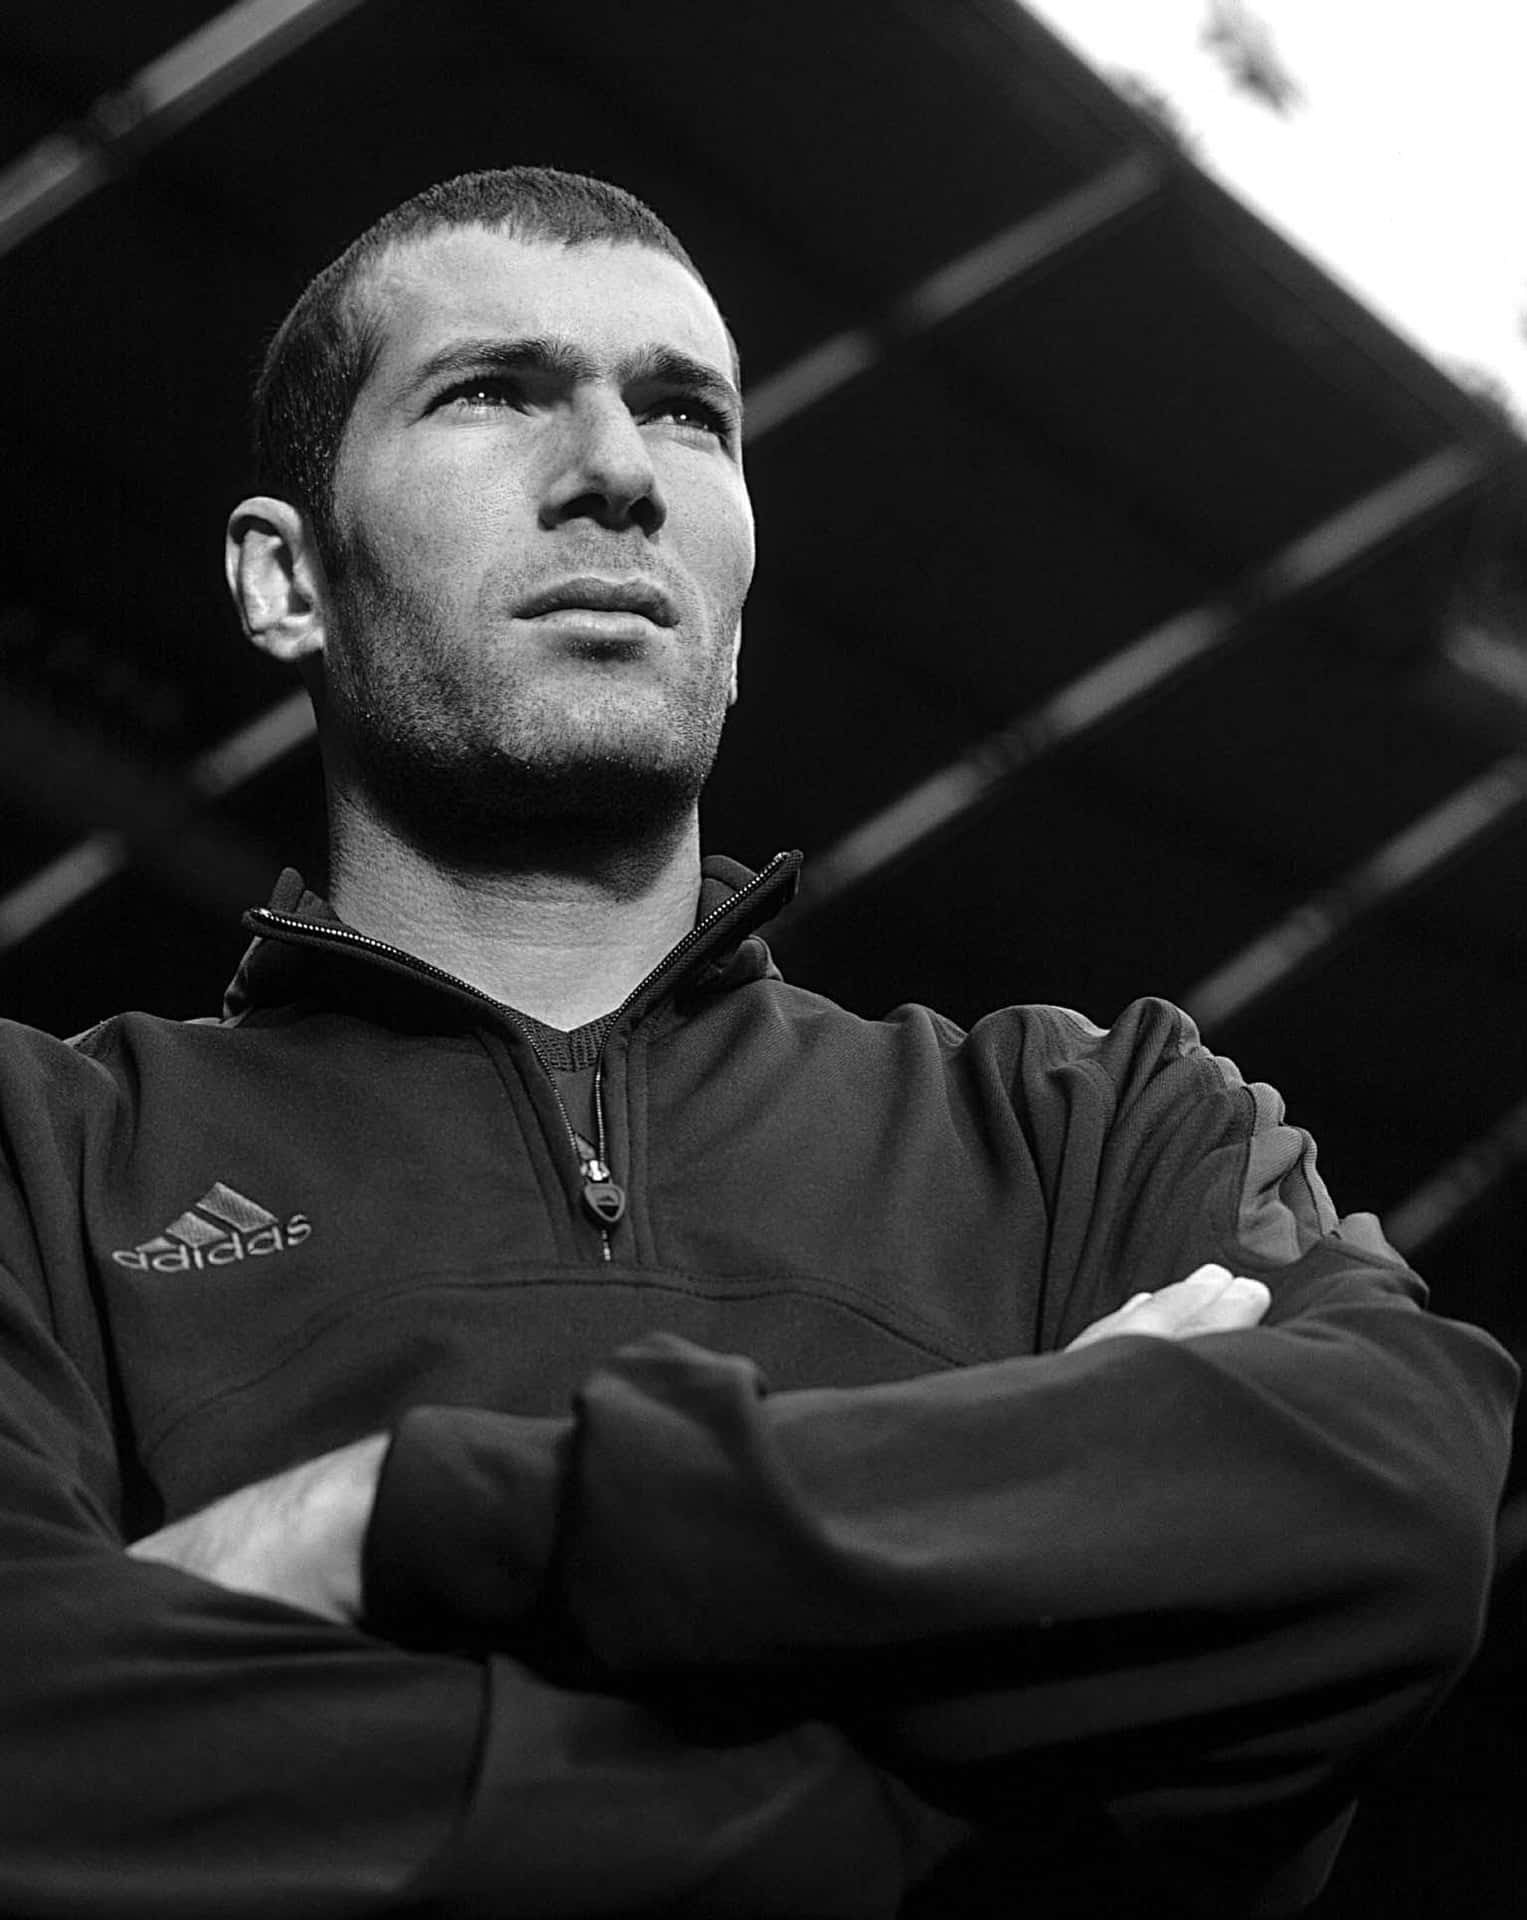 Zinedine Zidane sort og hvid fotografi Wallpaper